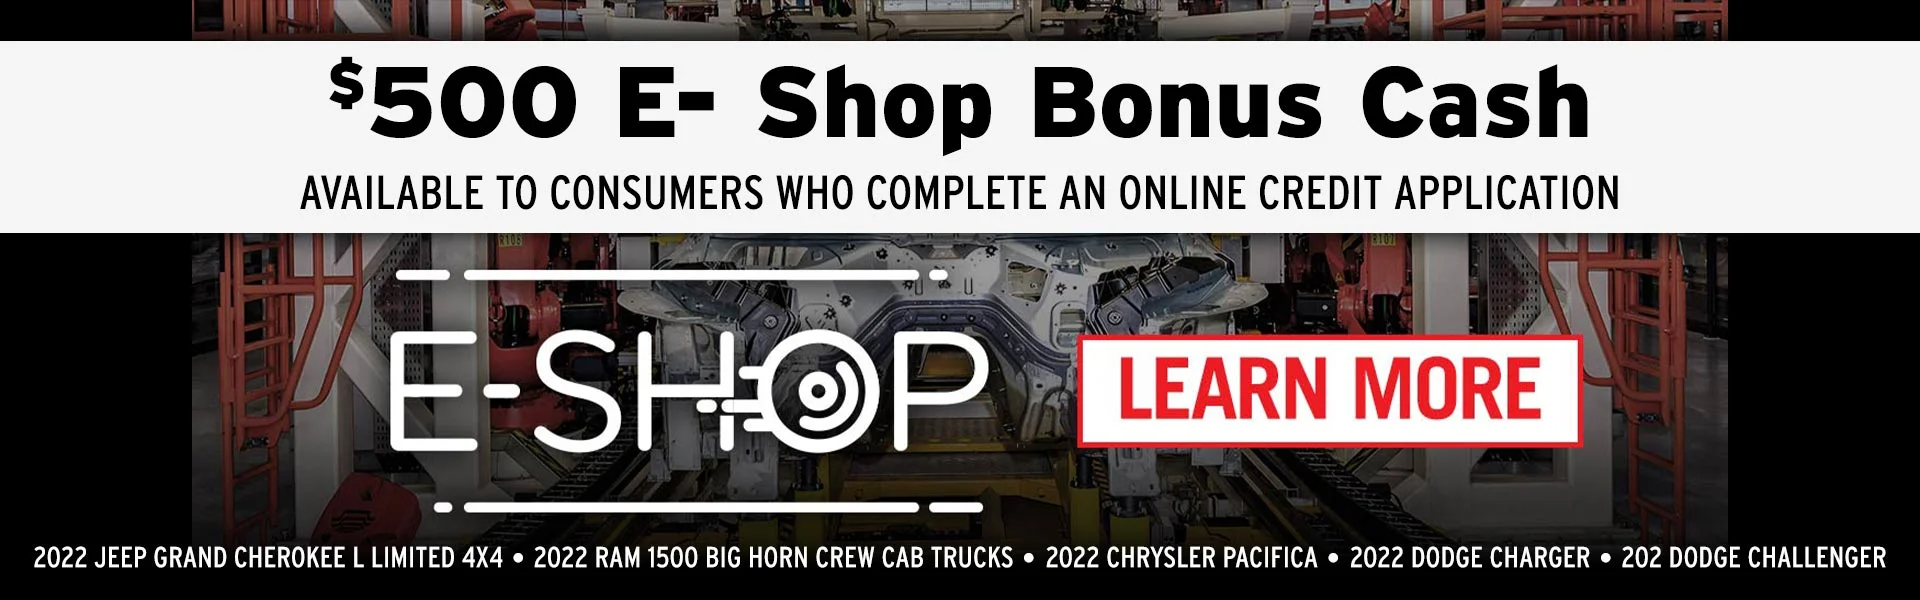 $500 E-Shop Bonus Cash - Learn More